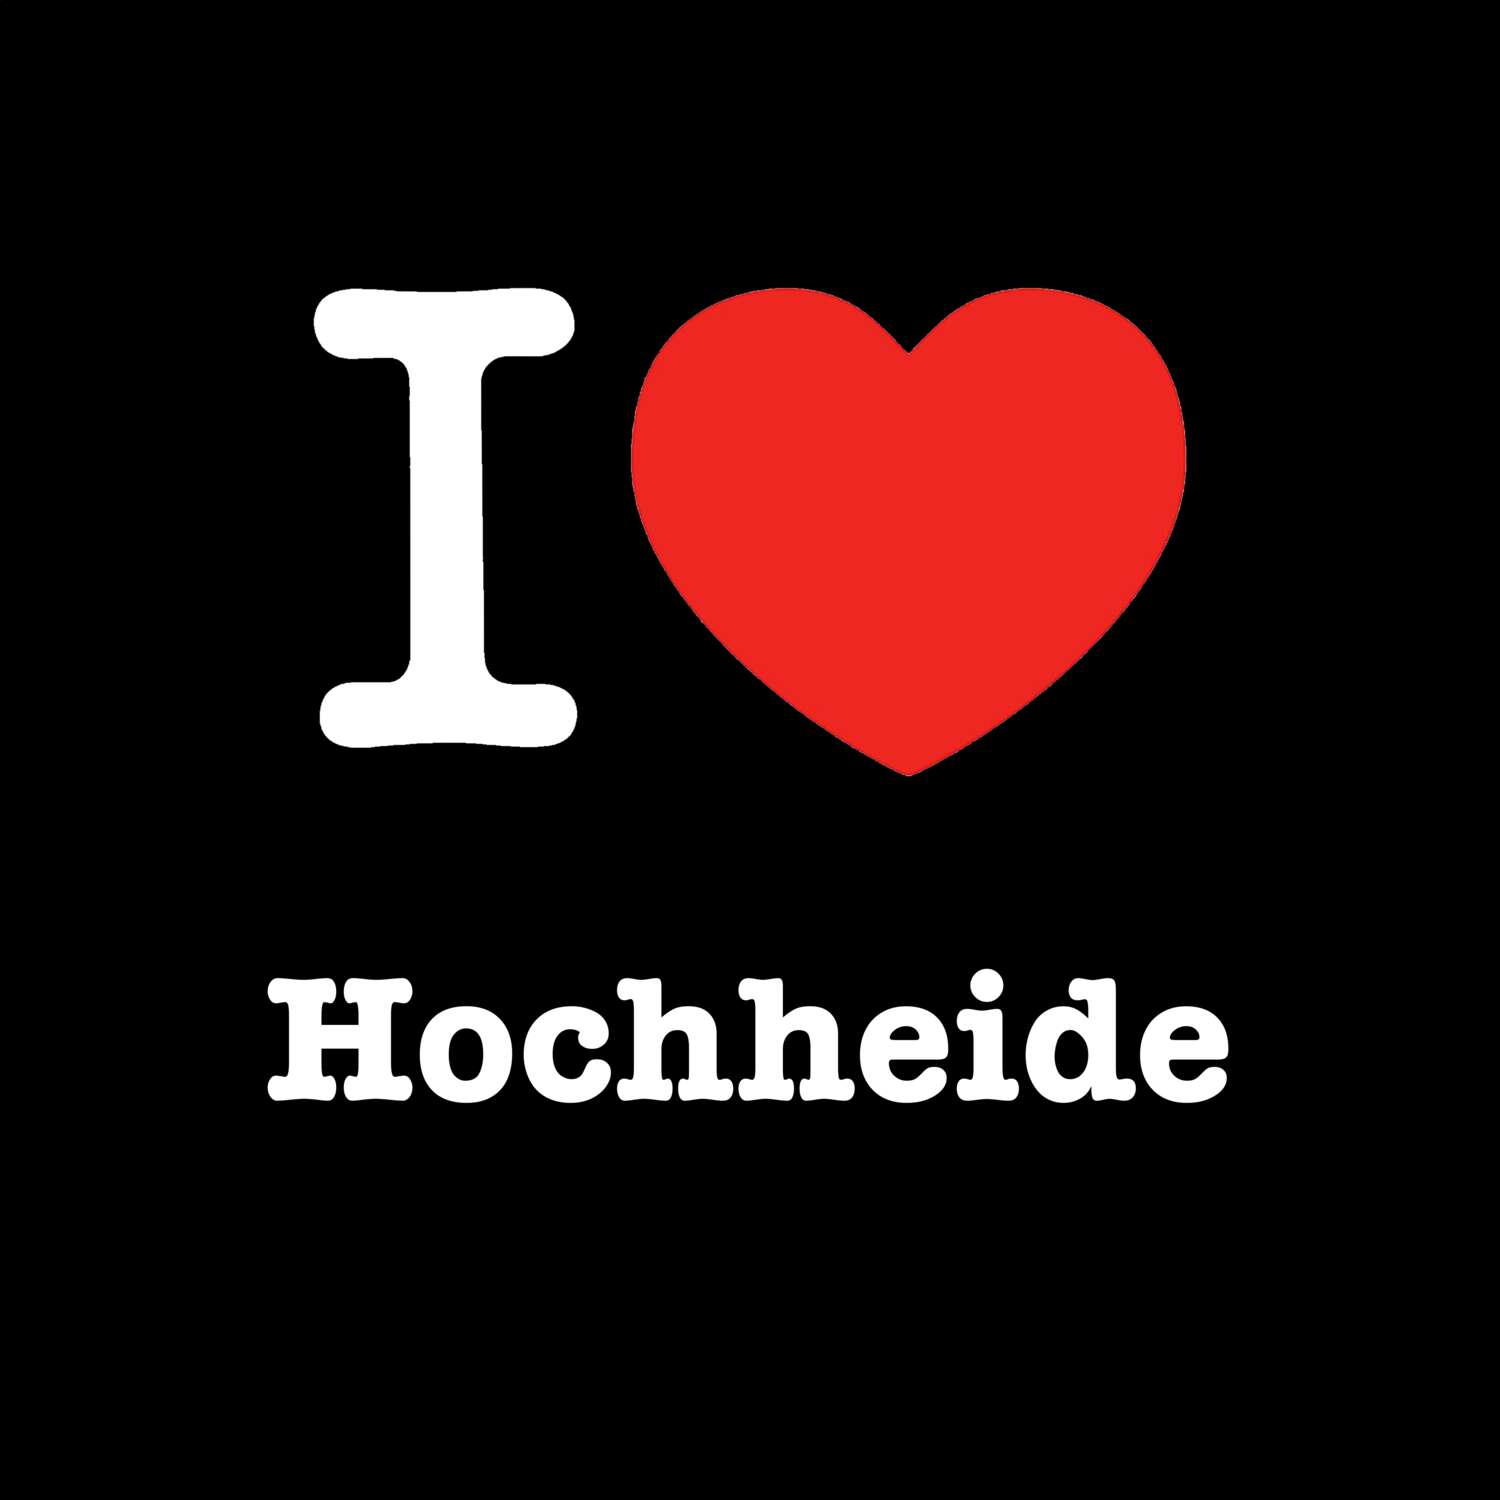 Hochheide T-Shirt »I love«